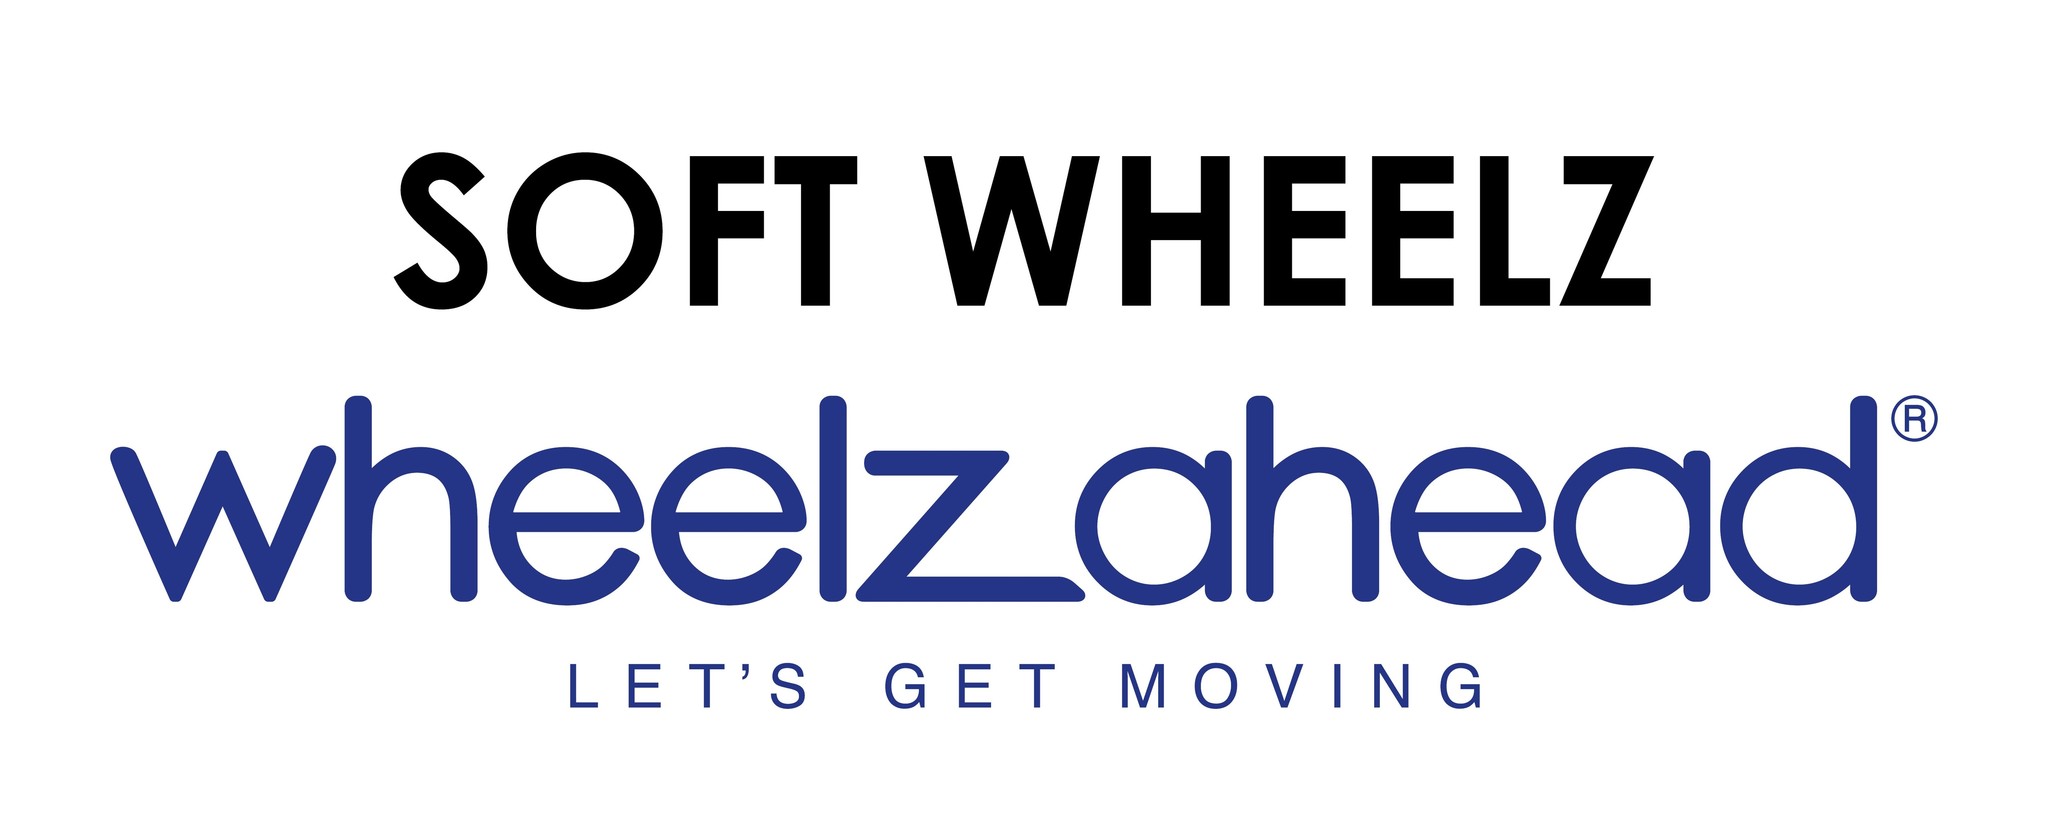 Wheelzahead SOFT Wheelz TRACK